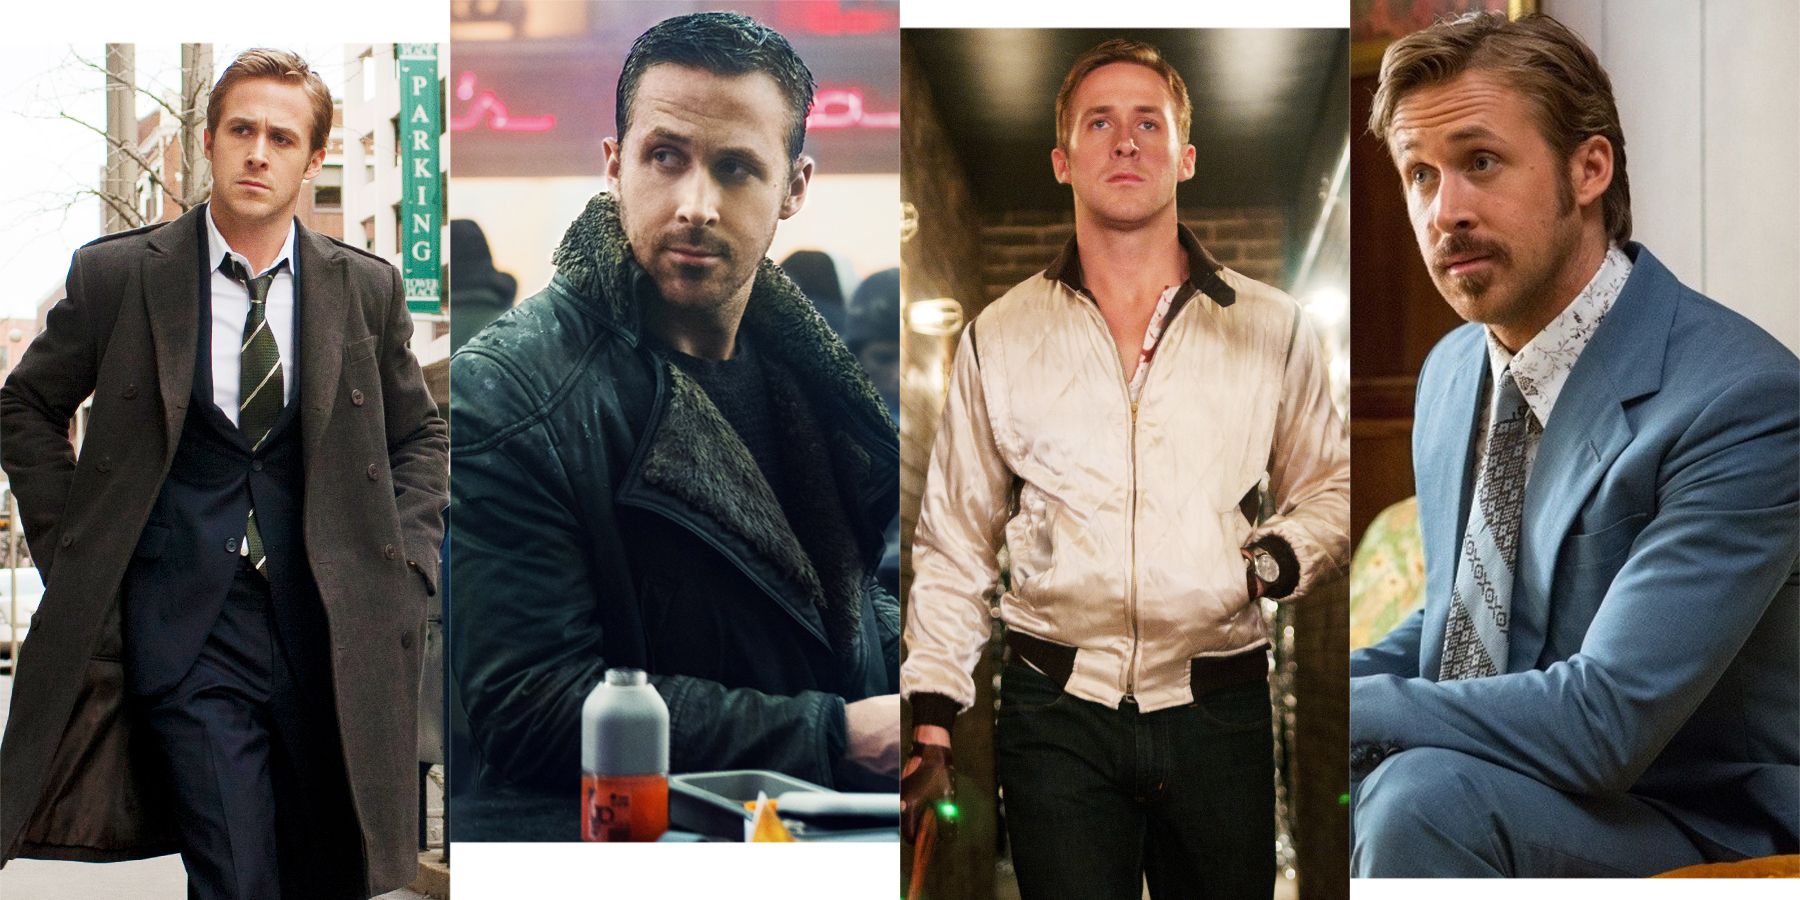 Ana de Armas Talks Blade Runner 2049 and Working With Ryan Gosling